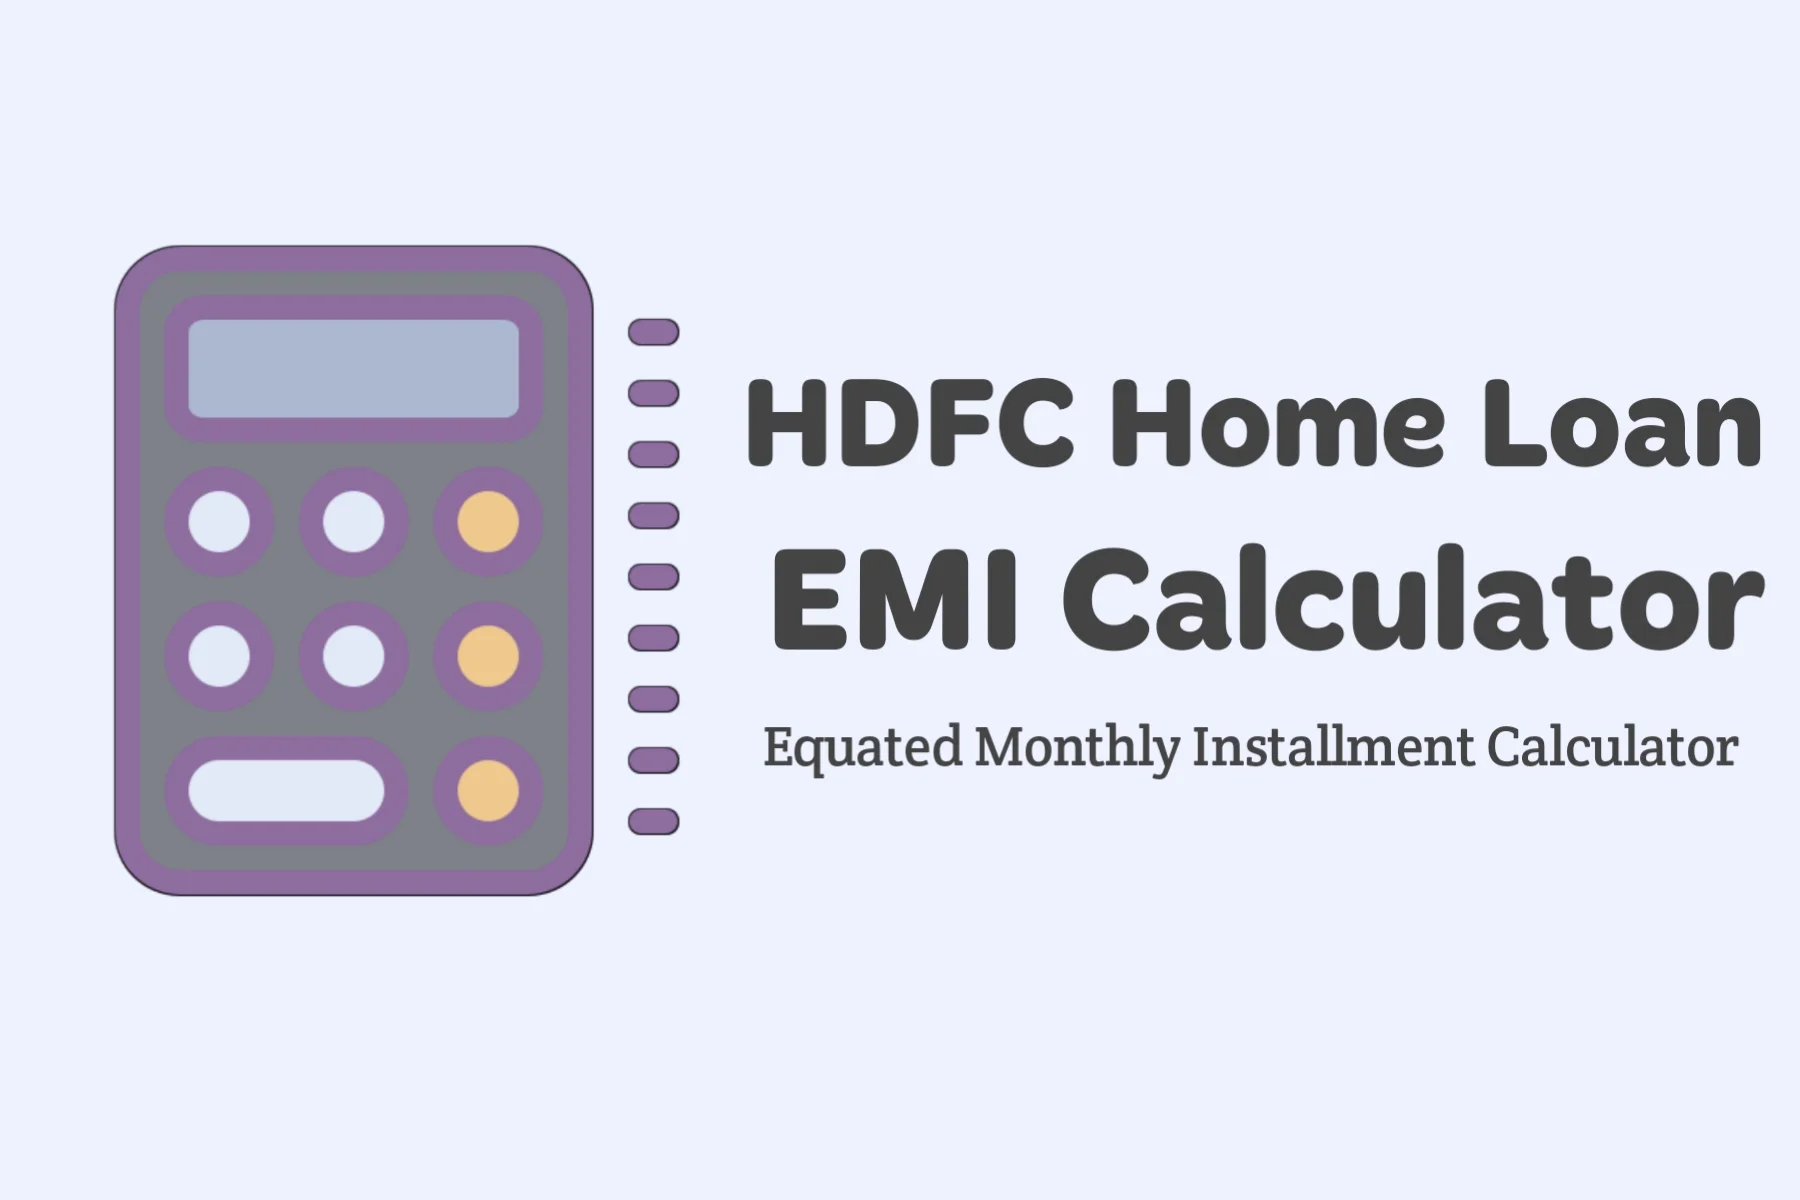 HDFC Bank Home Loan EMI Calculator